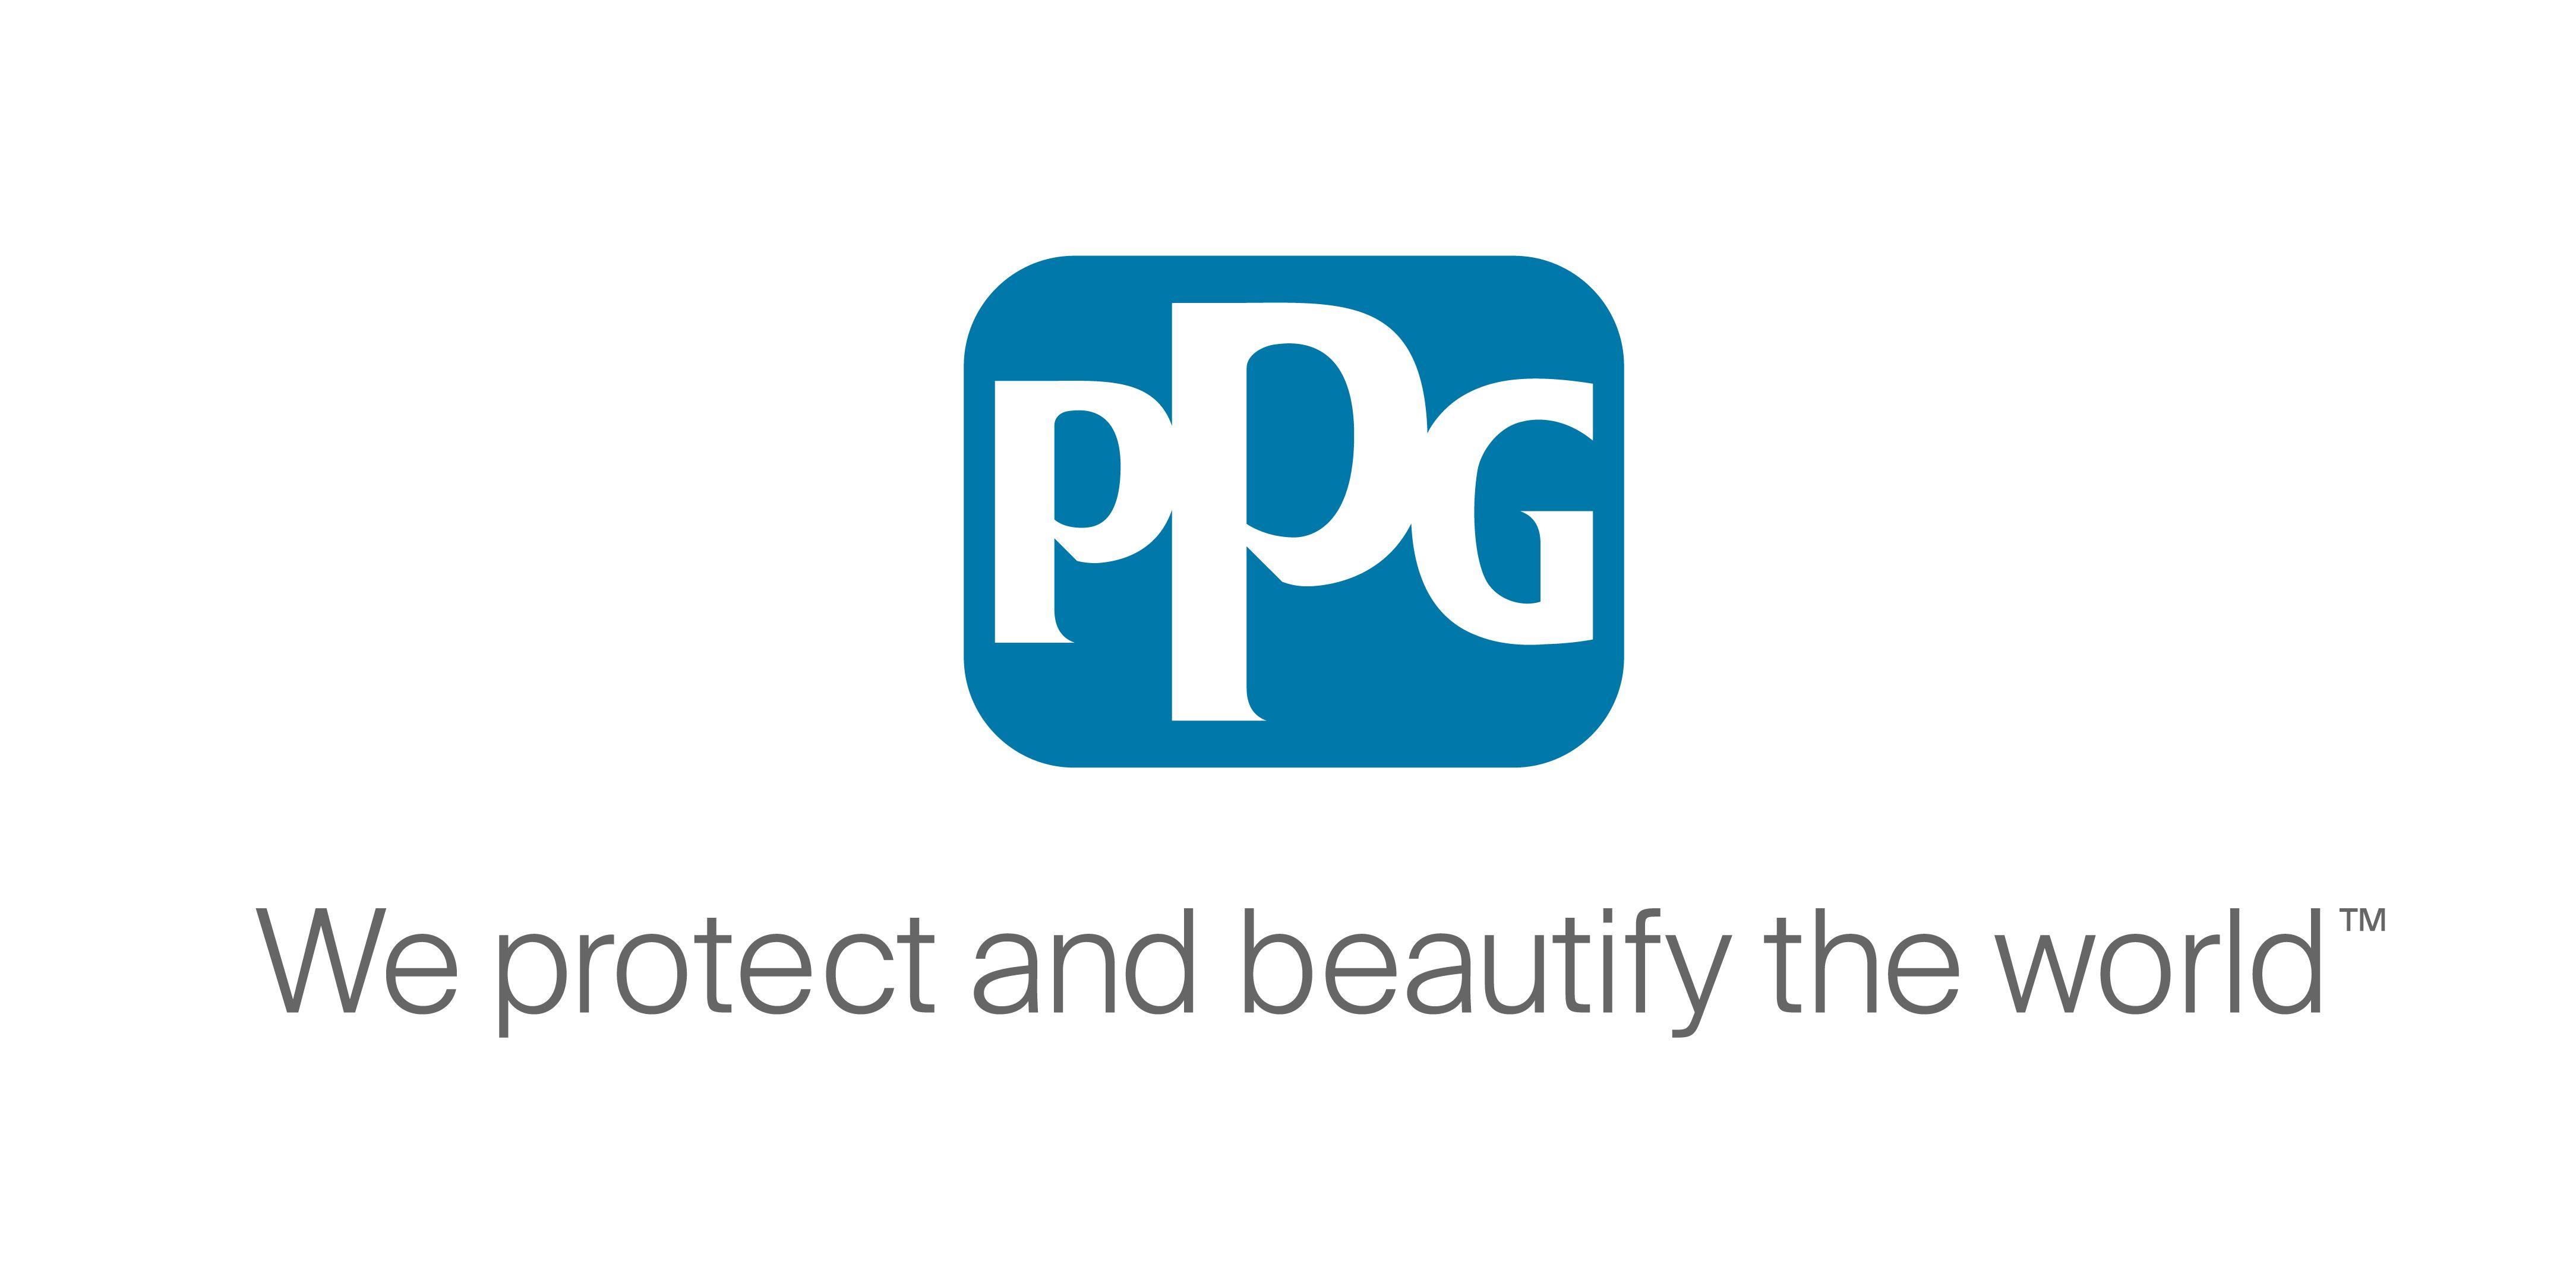 PPG Logo - Images